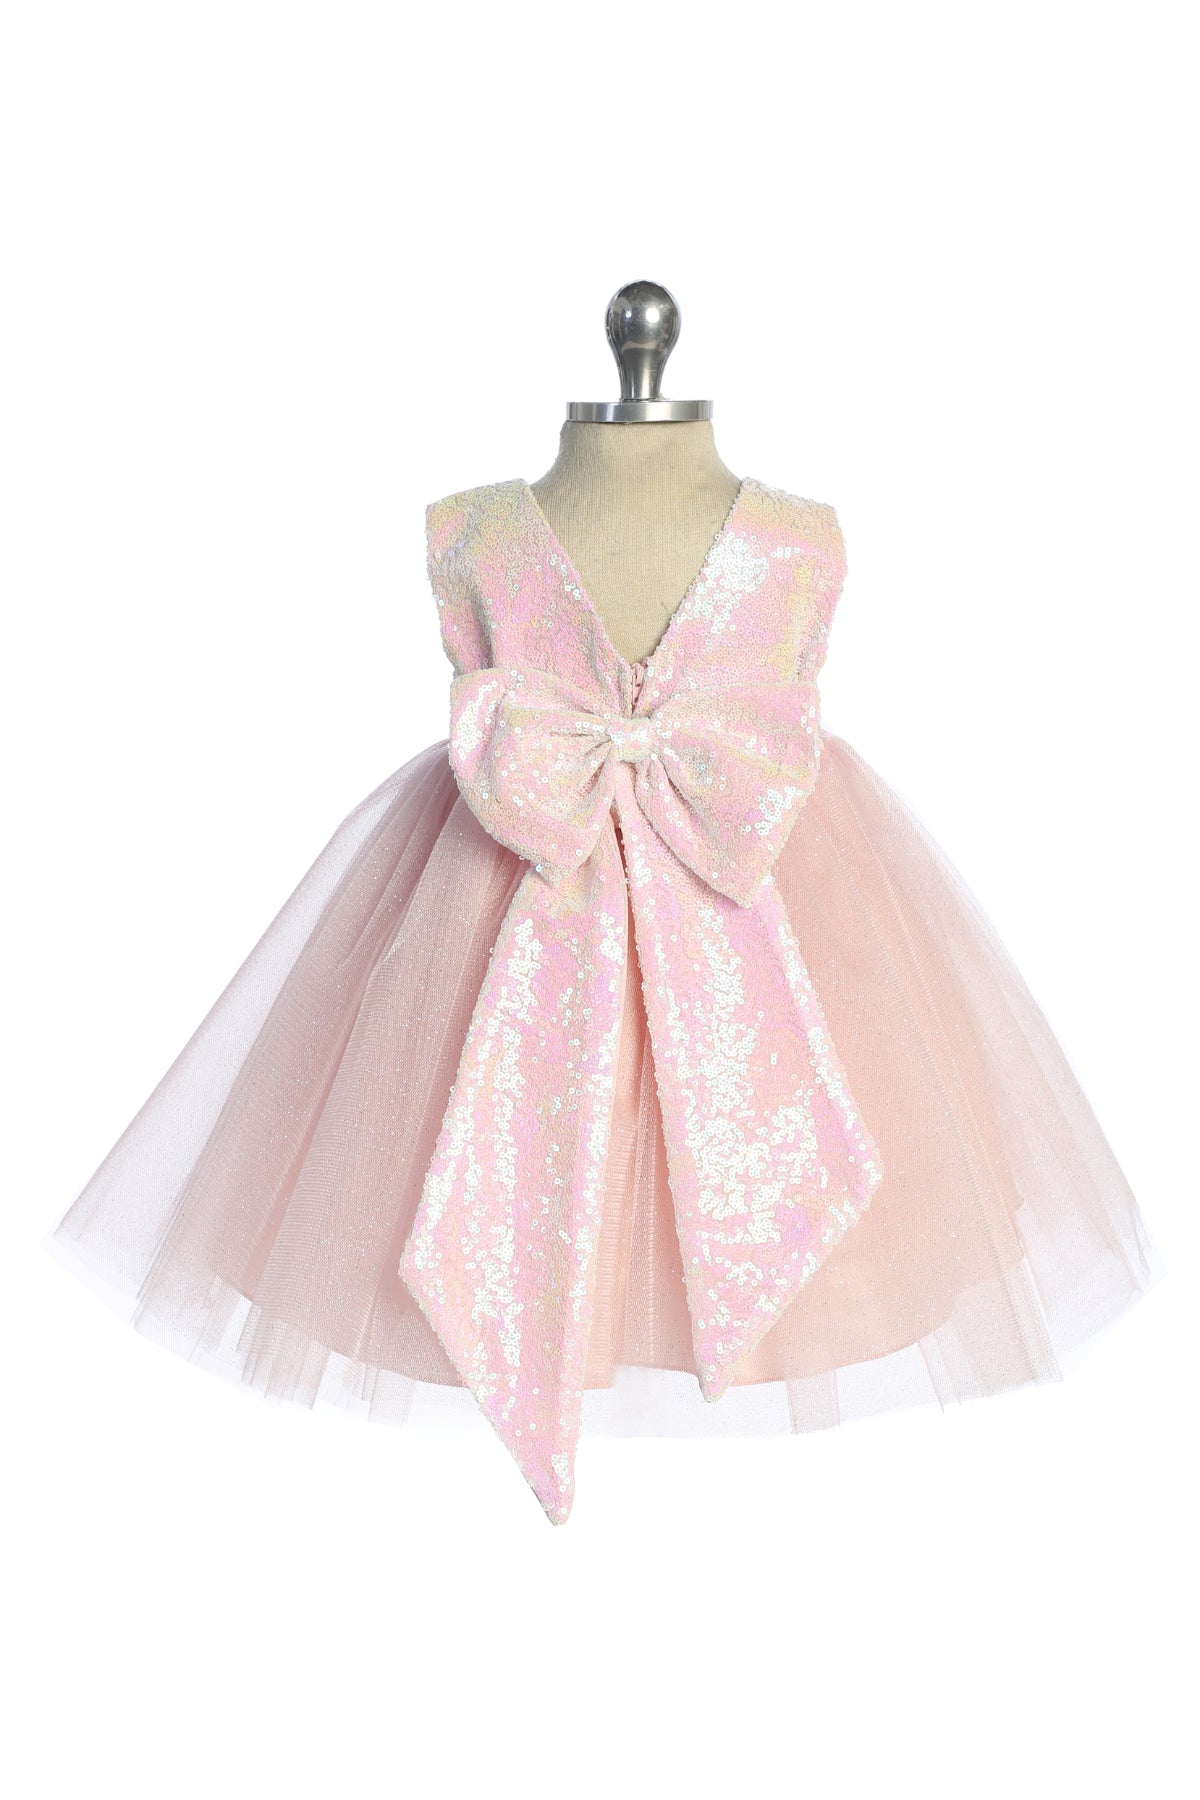 498B Pink/Iridescent Sequins V Back & Bow Baby Dress